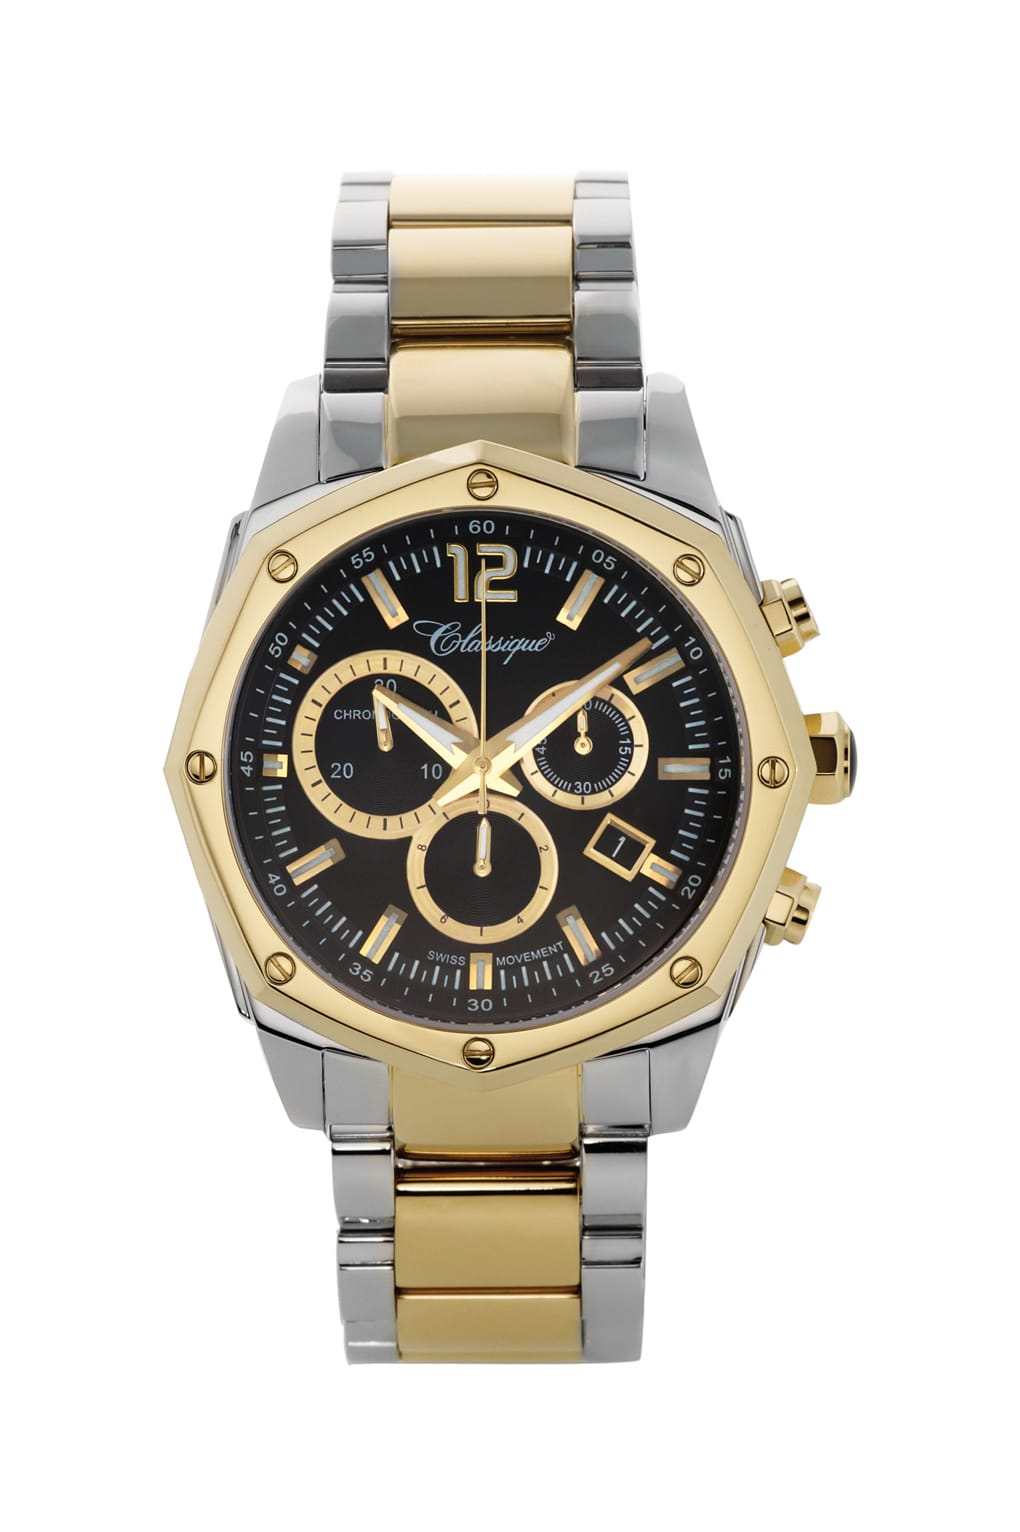 Chronograph 100m Swiss Quartz Gold Plated Watch available at LeGassick Diamonds and Jewellery Gold Coast, Australia.